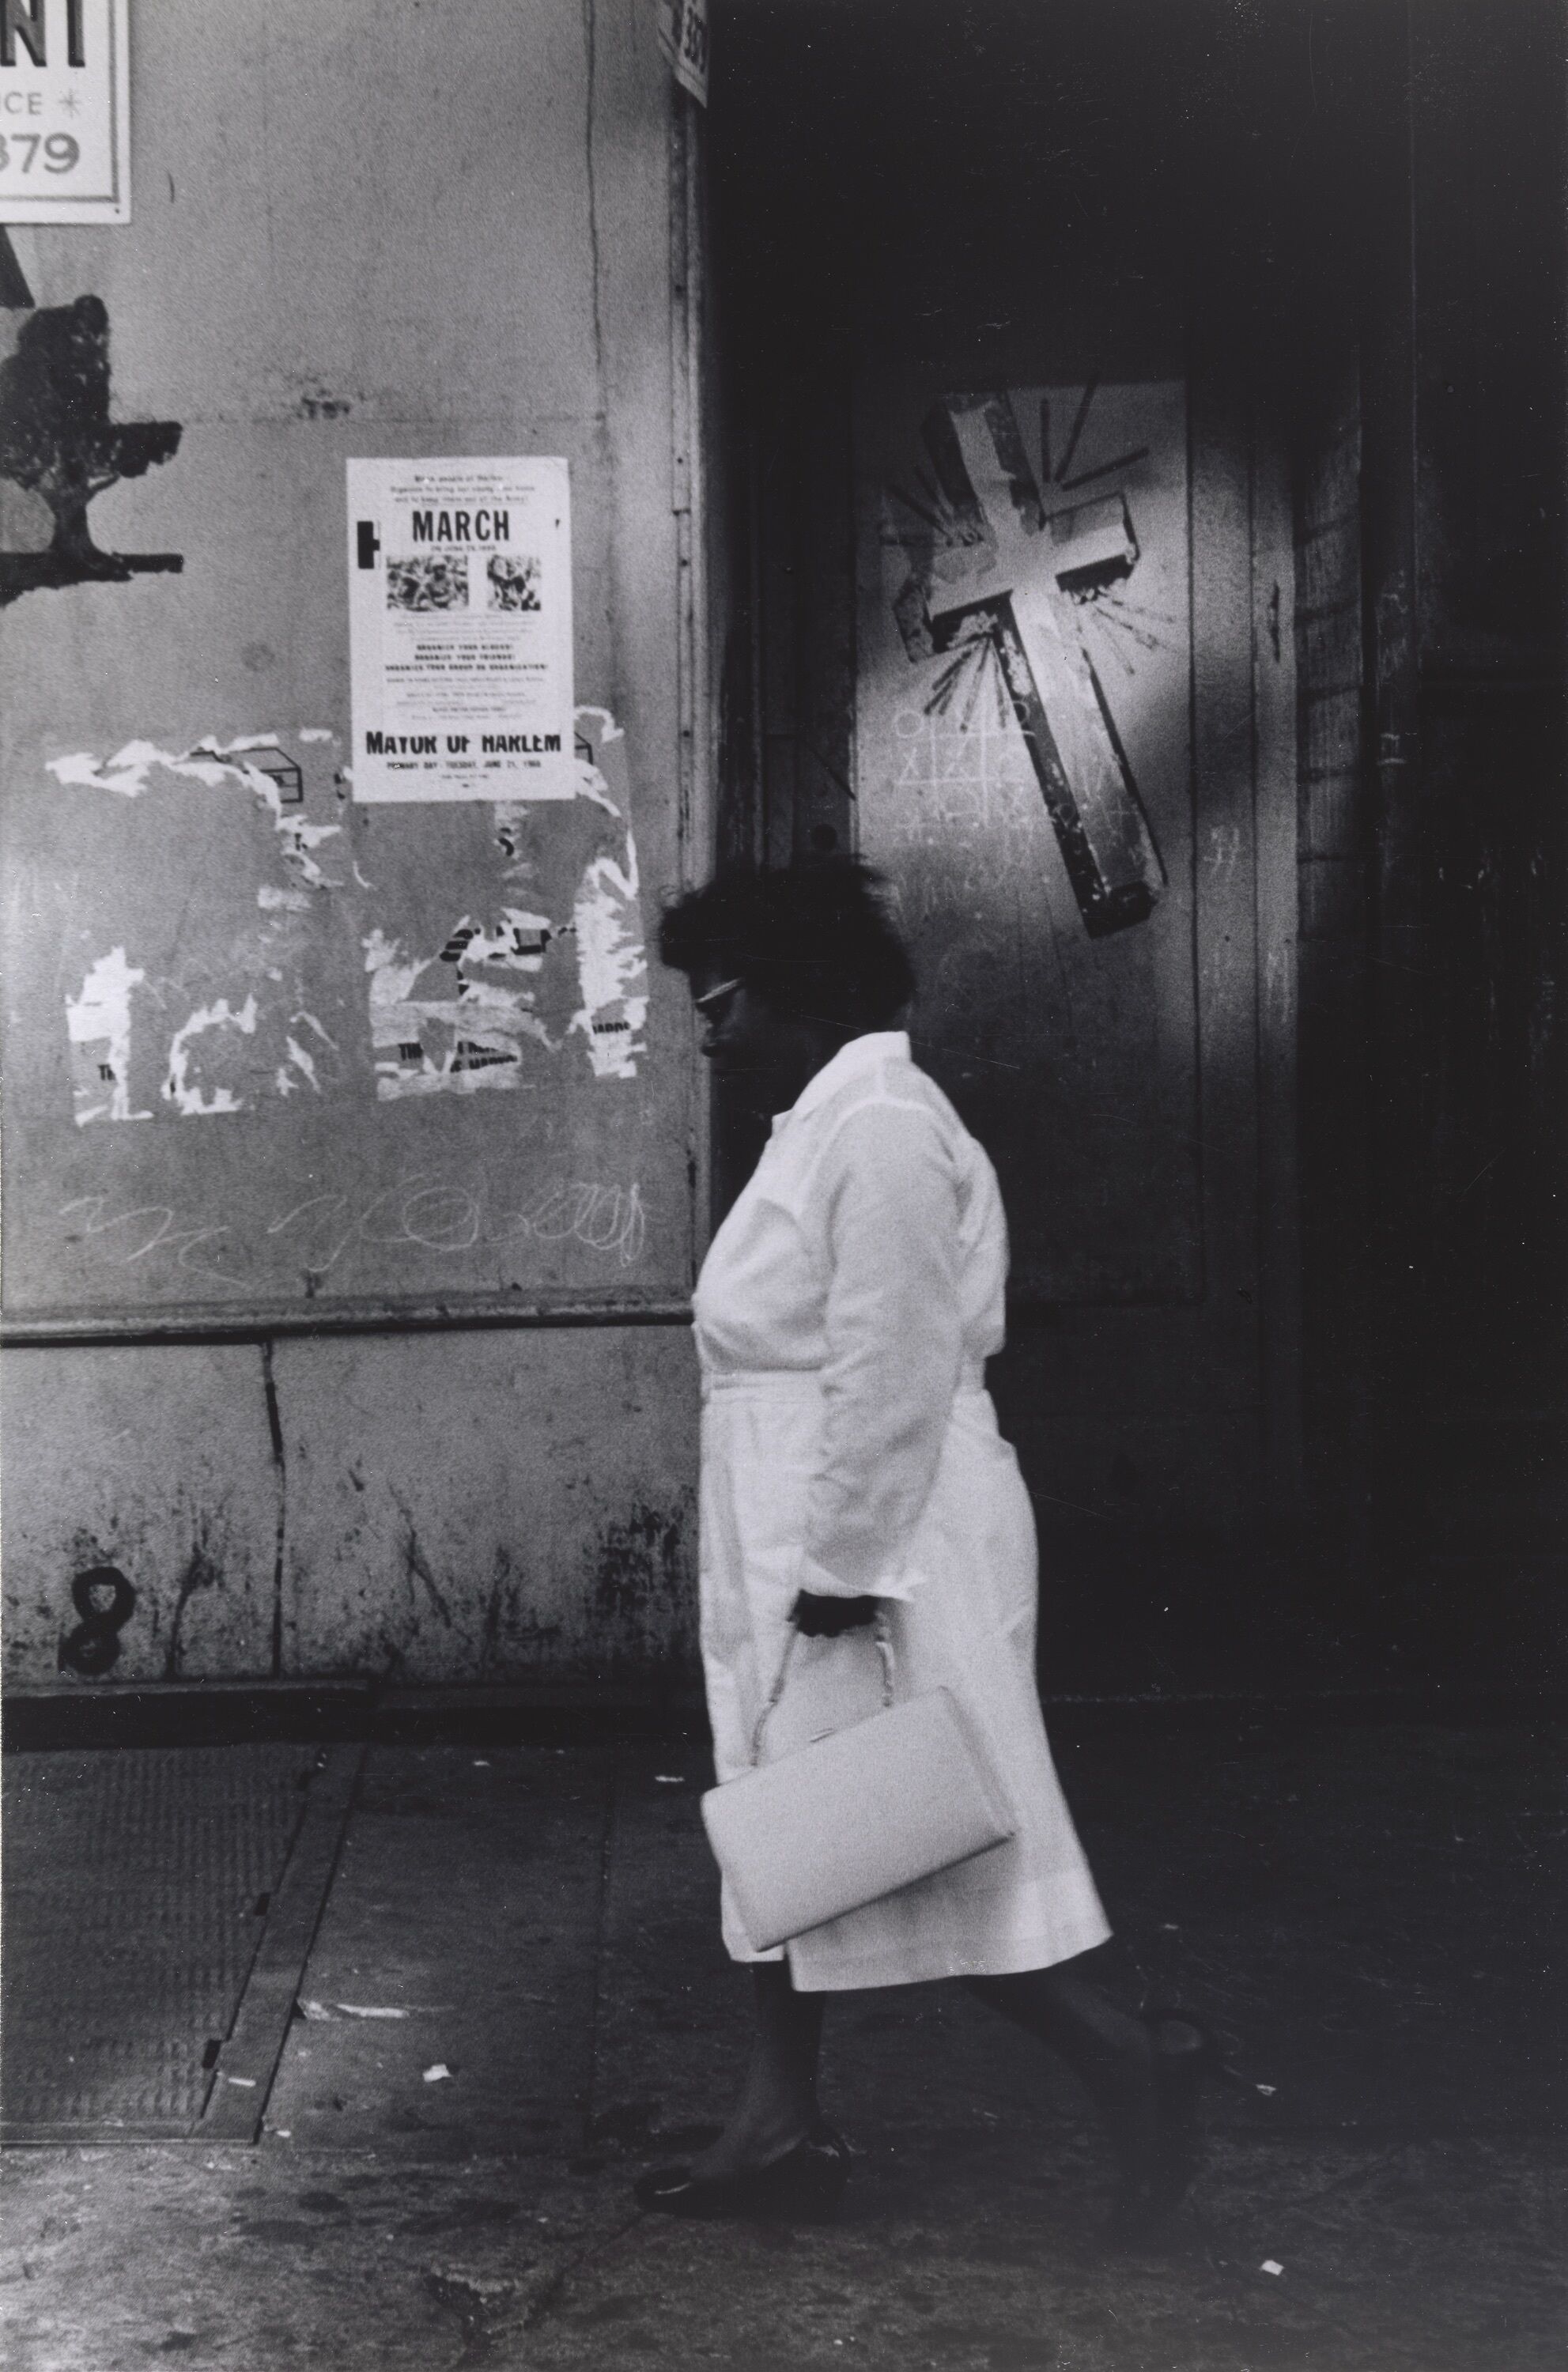 A woman walking down a street, wearing a white dress and holding a handbag.